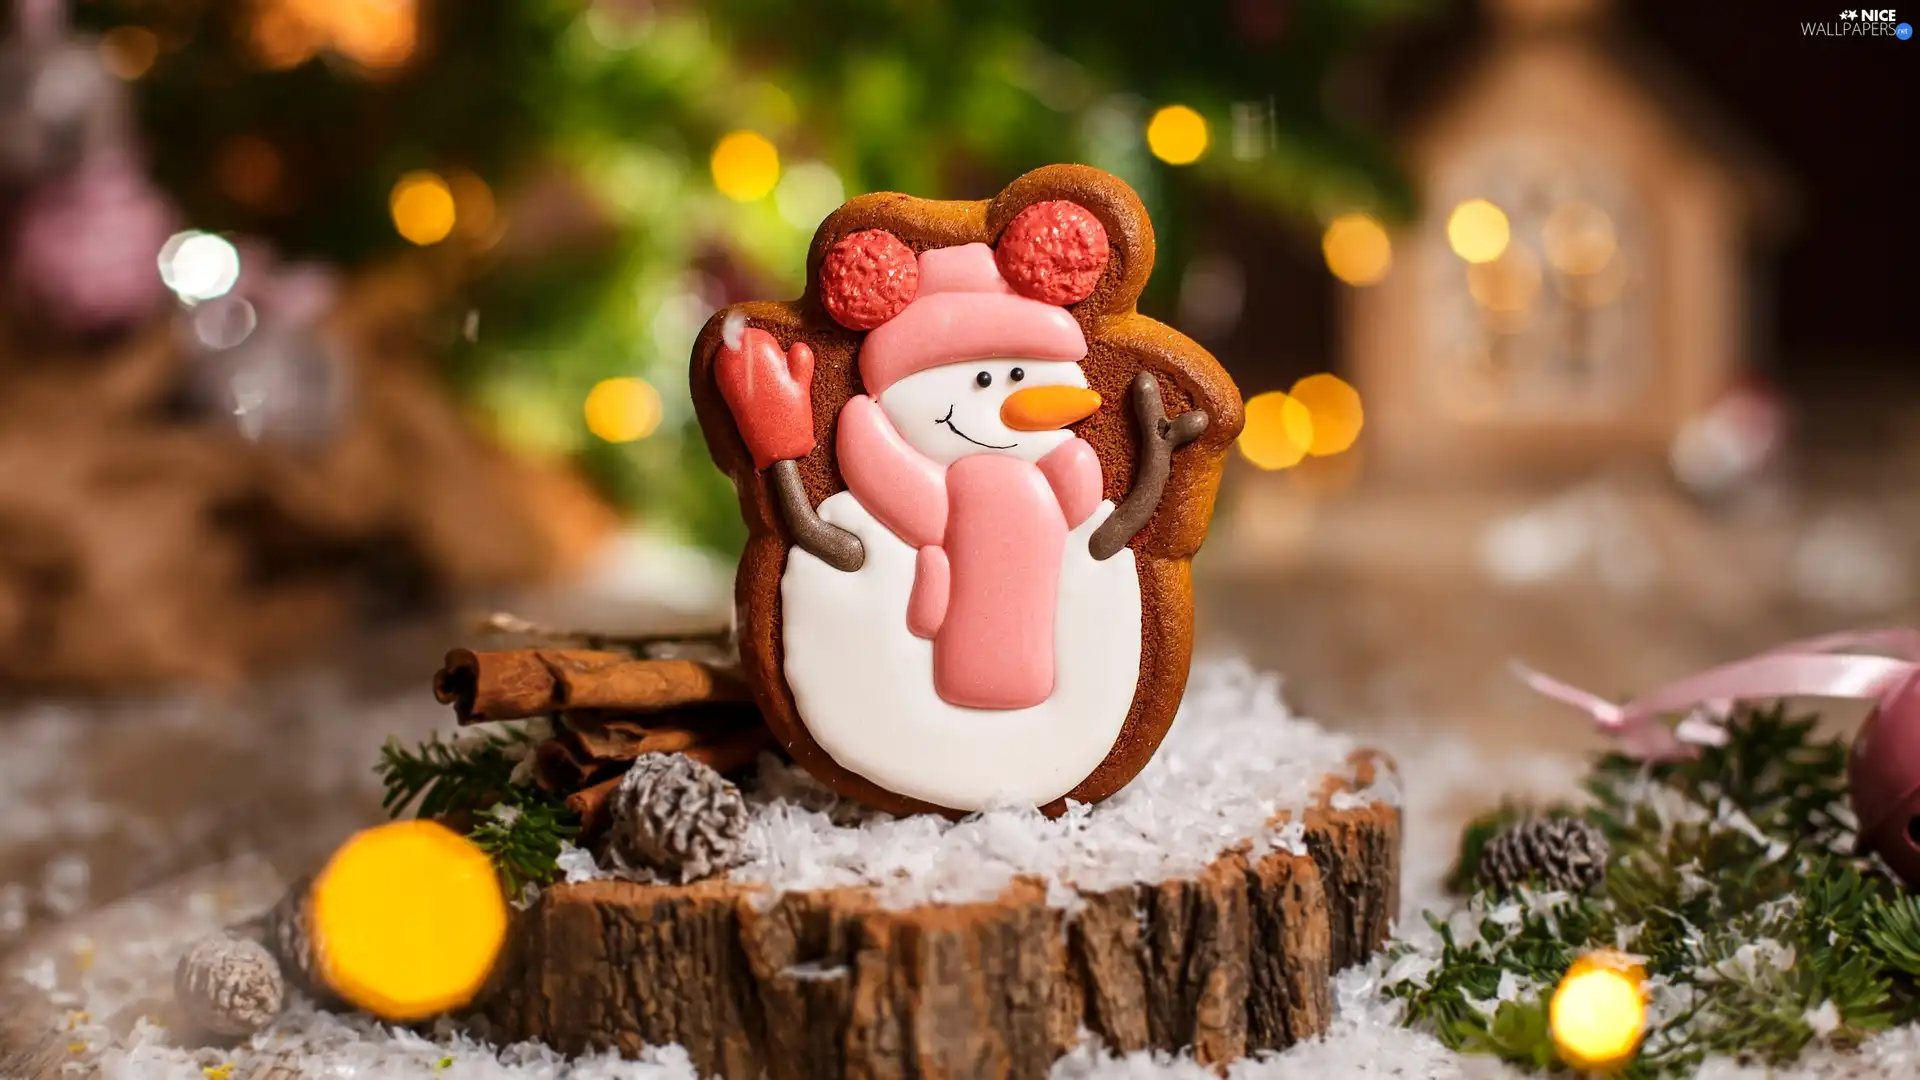 Snowman, Christmas, cook